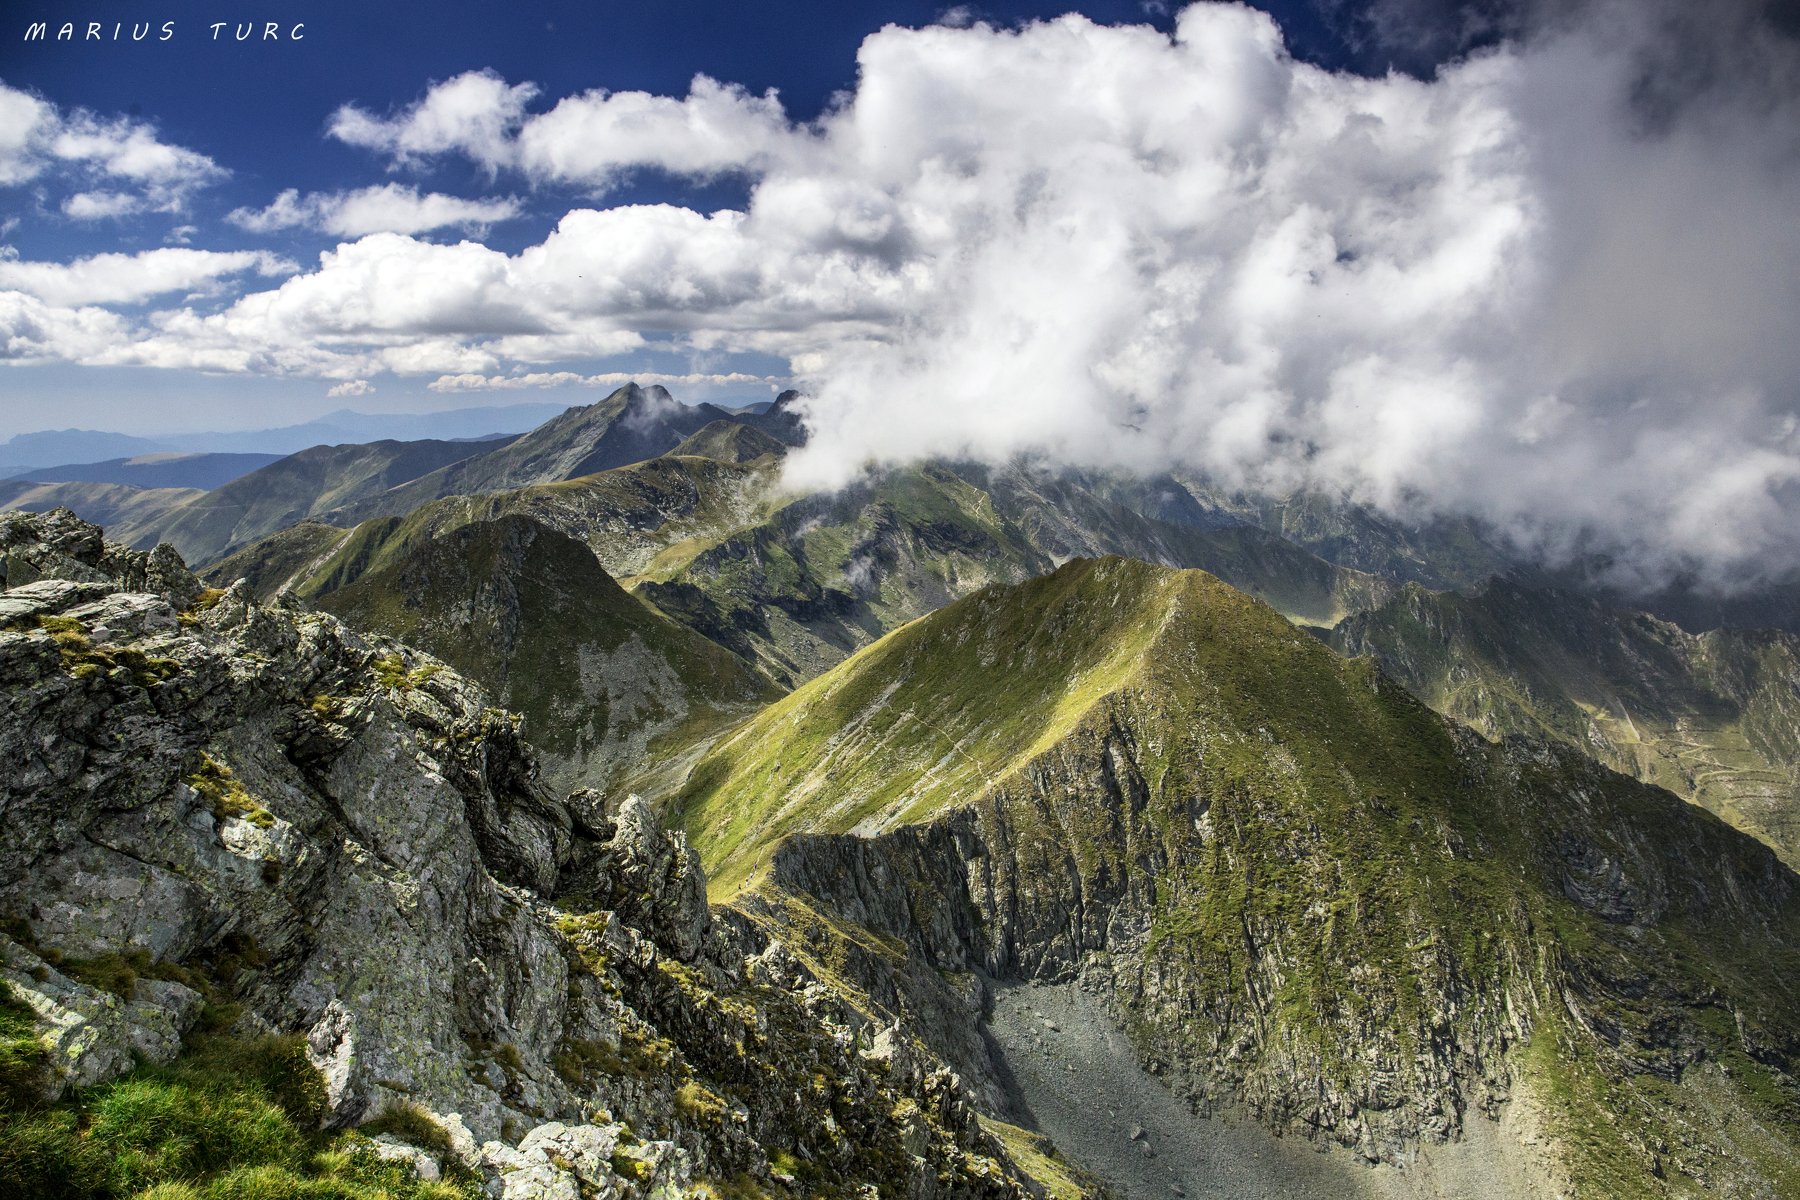 Fagaras mountains in Romania, Marius Turc